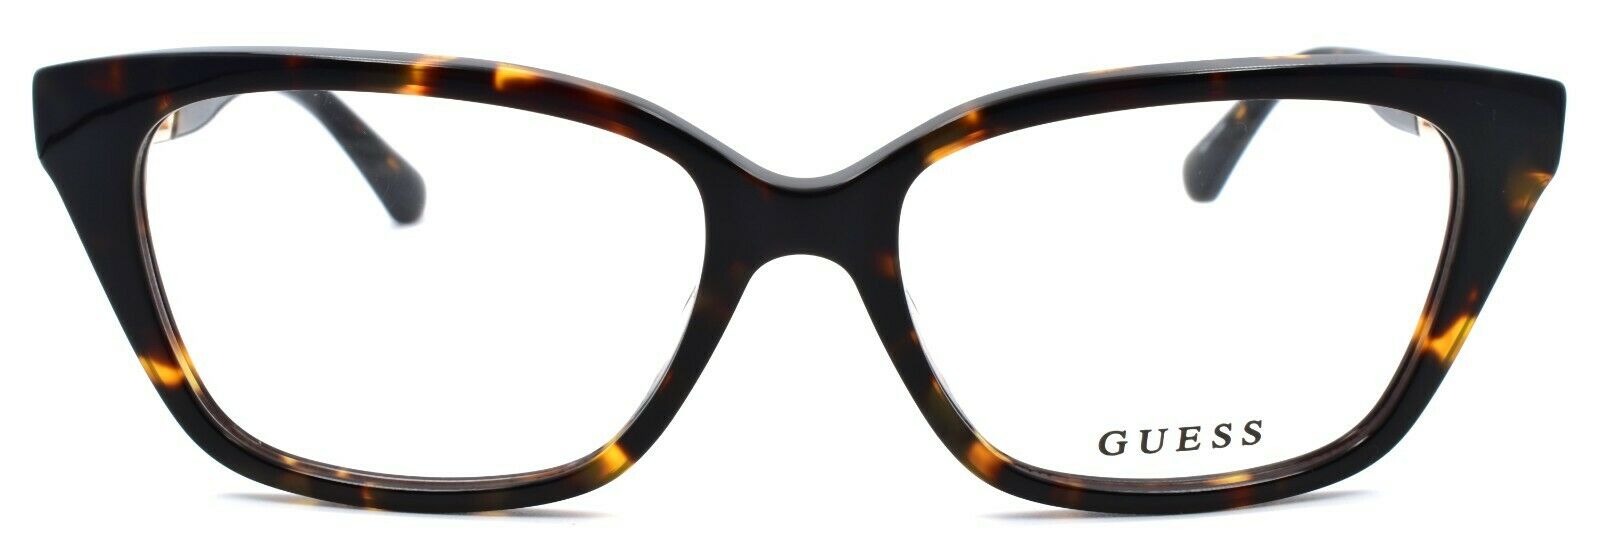 3-GUESS GU2784 052 Women's Eyeglasses Frames 55-16-140 Dark Havana-889214145765-IKSpecs